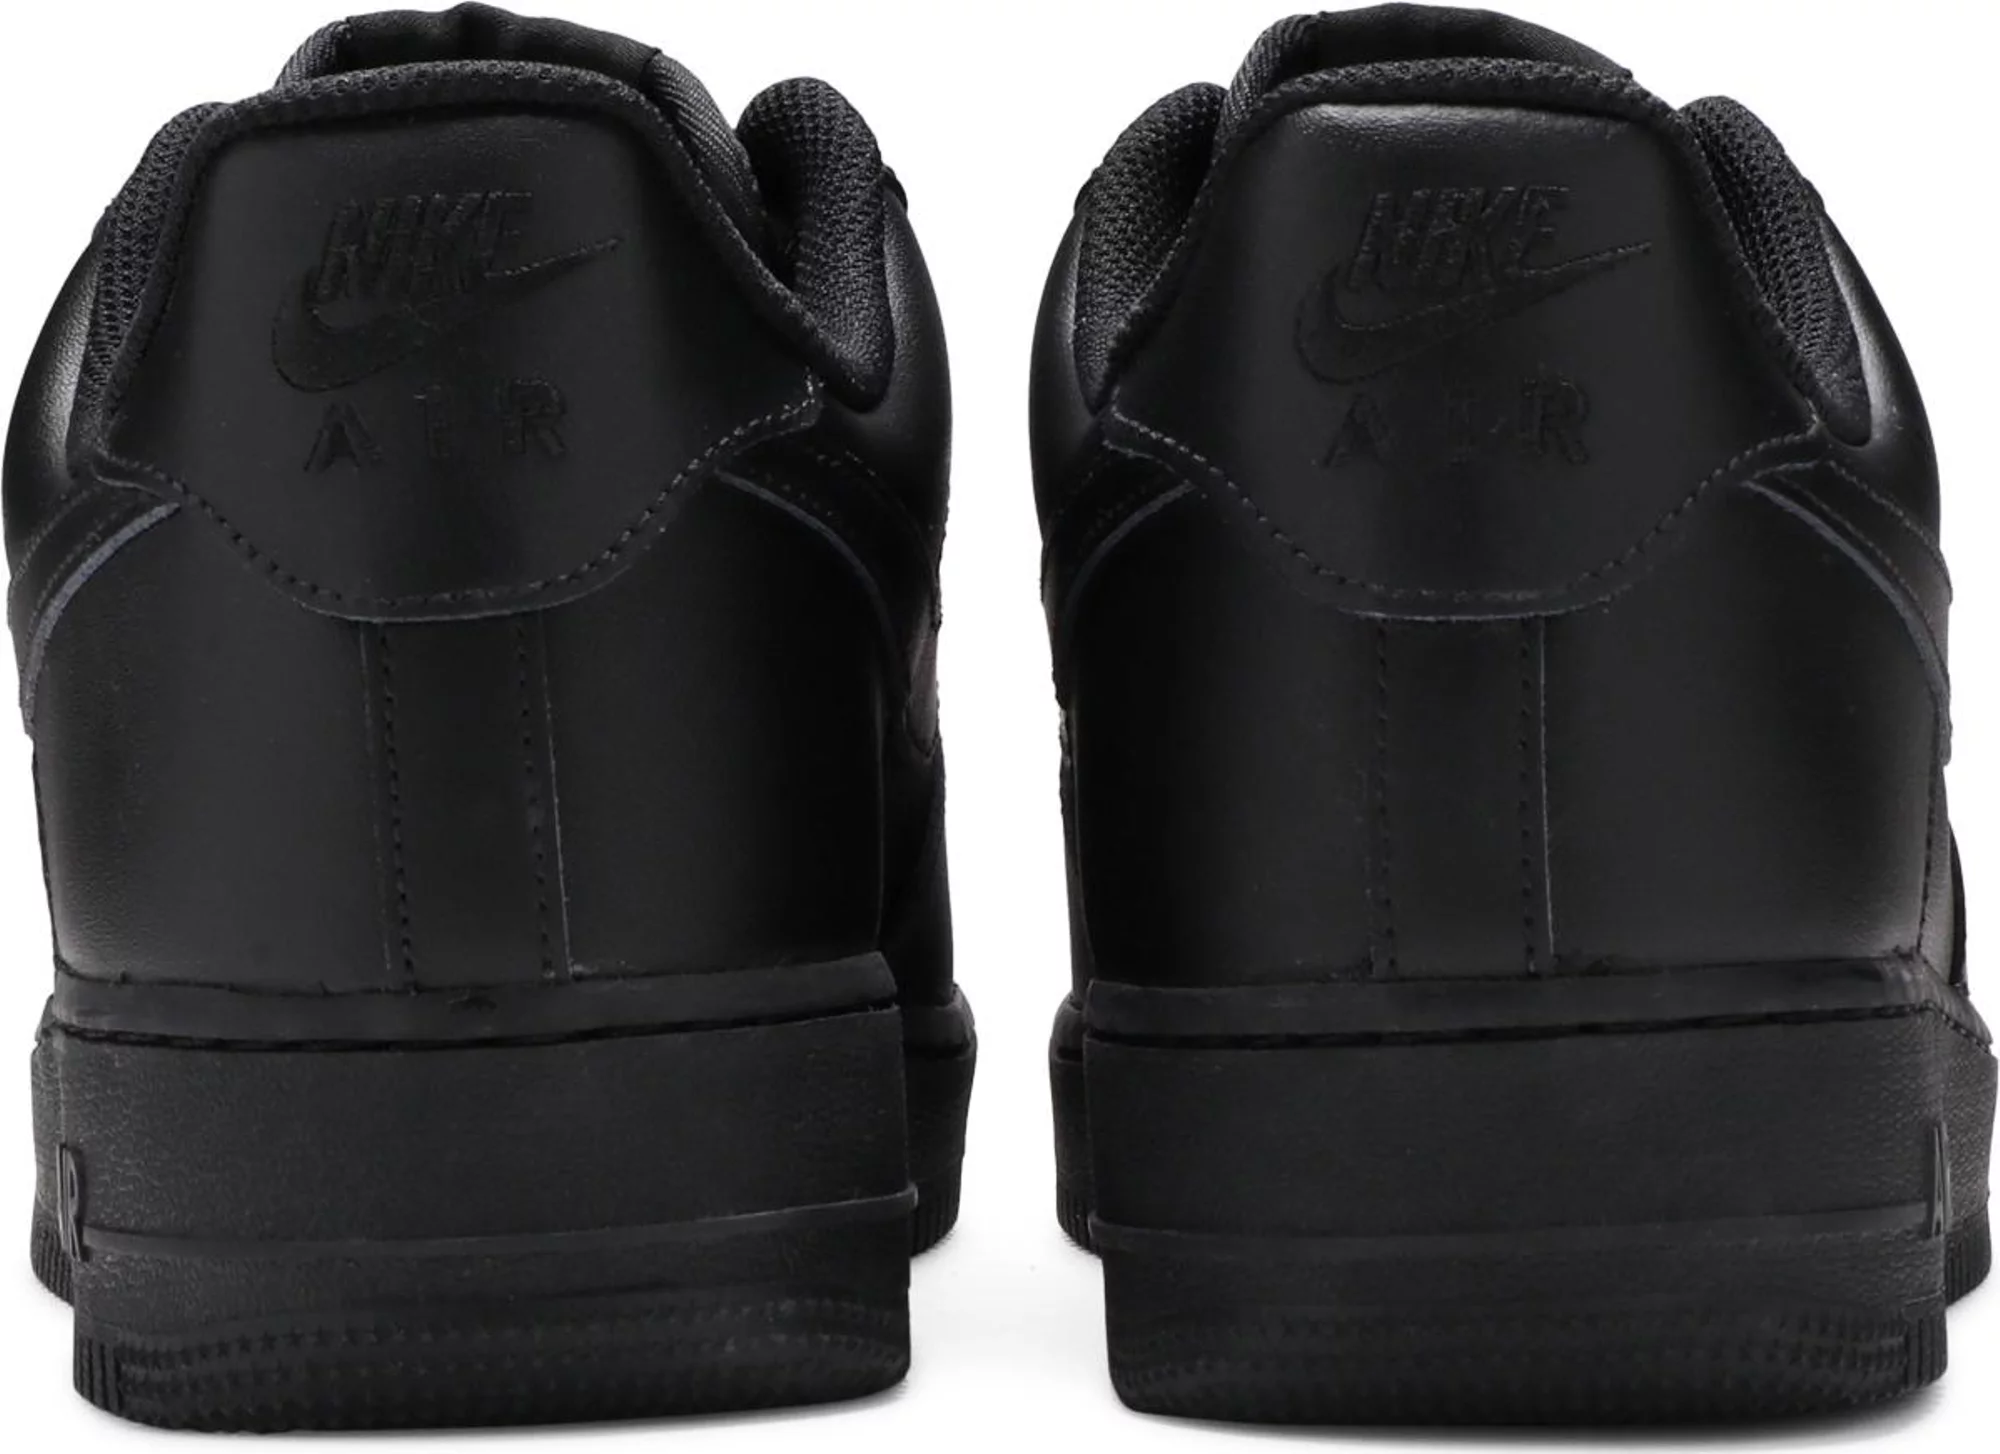 Air Force 1 '07 'Triple Black' - Nike - CW2288 001